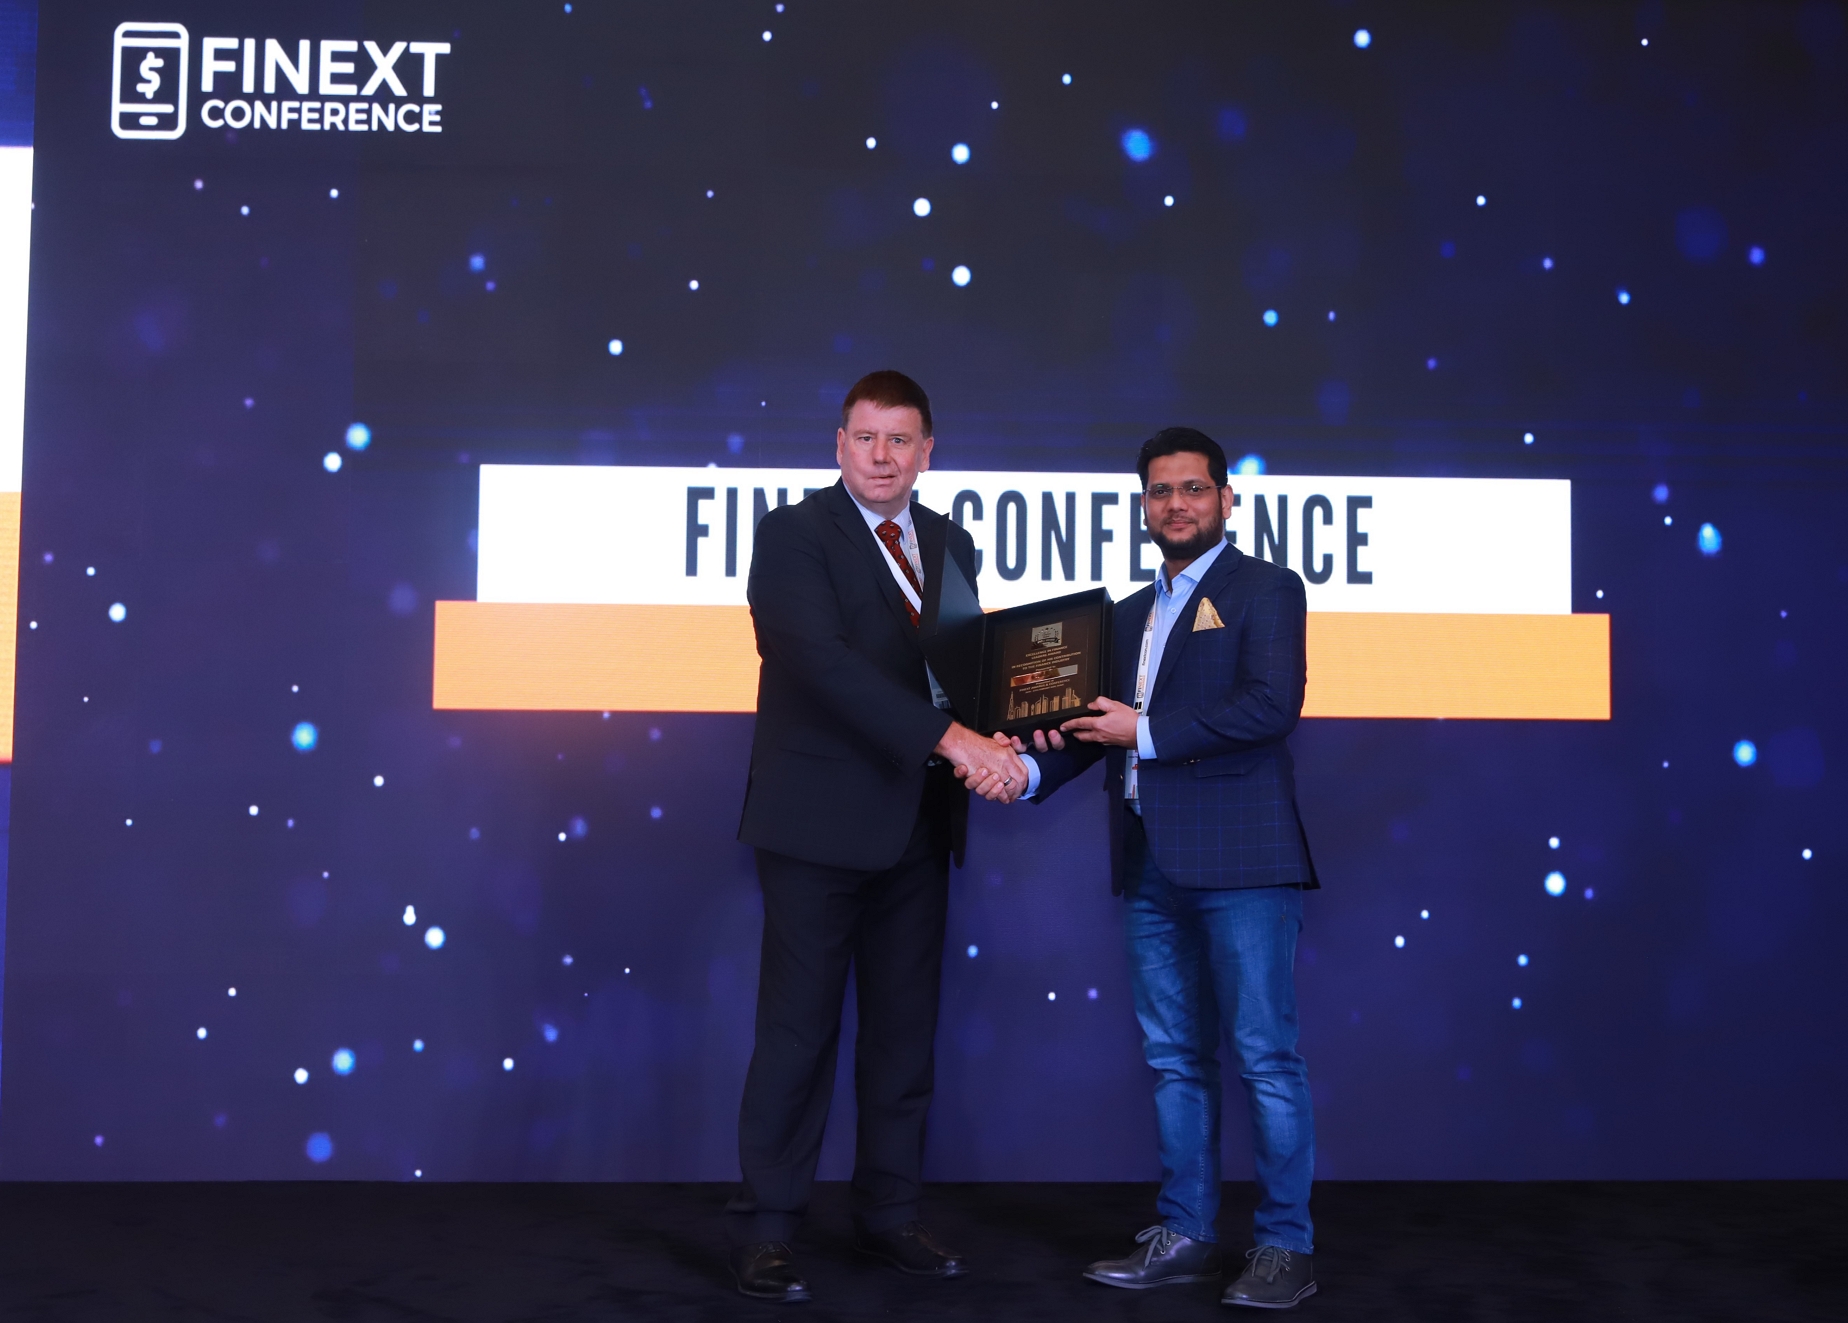 FiNext Conference Dubai 2020